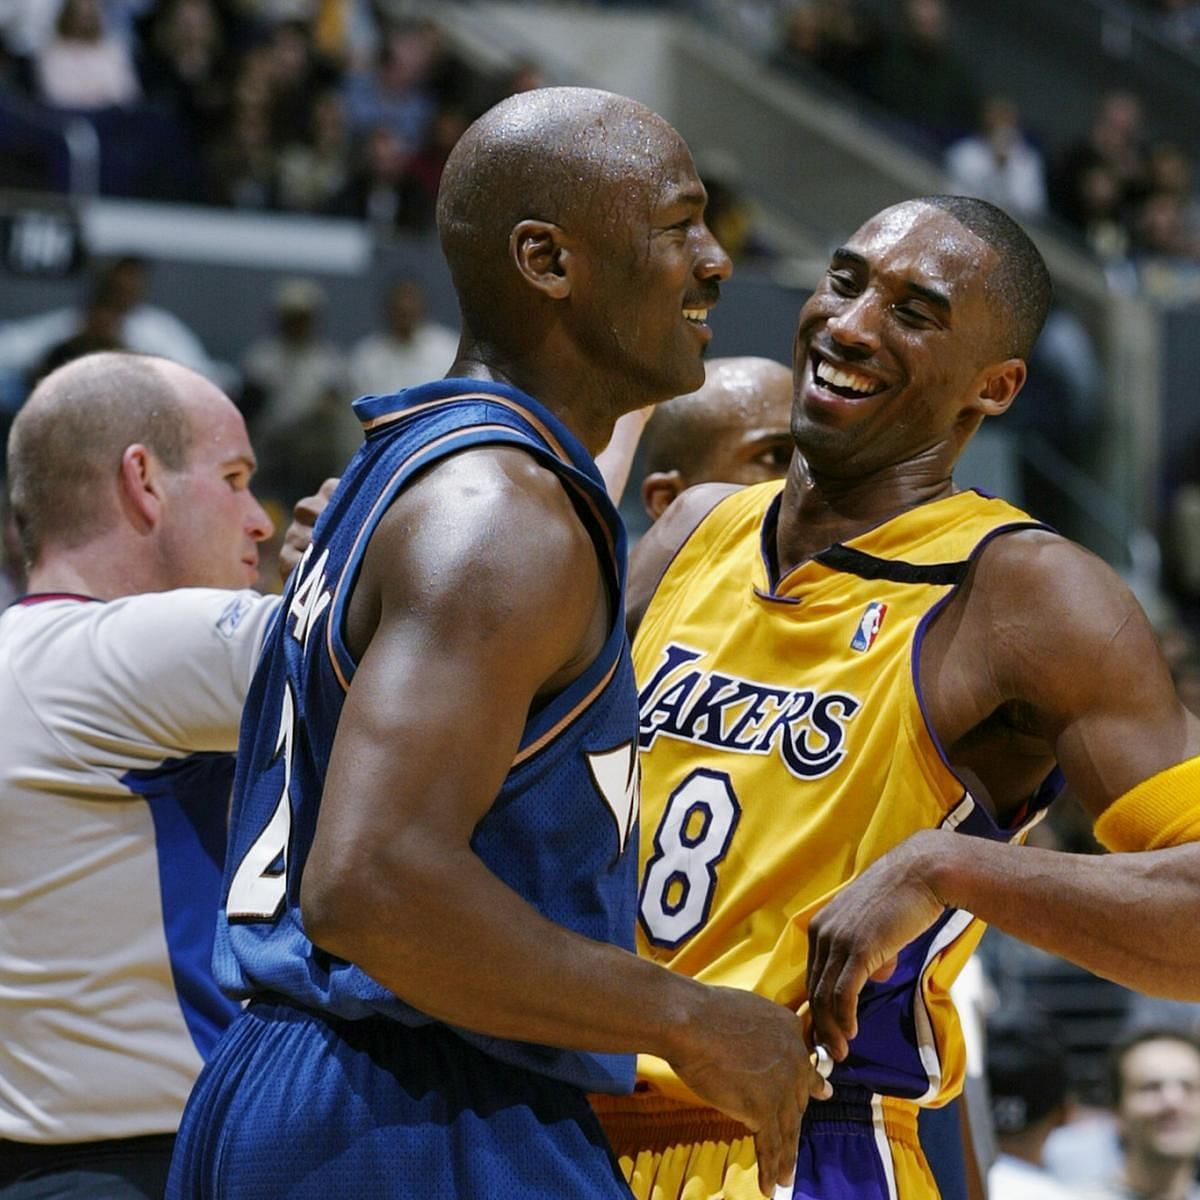 Michael Jordan and Kobe Bryant share a moment.